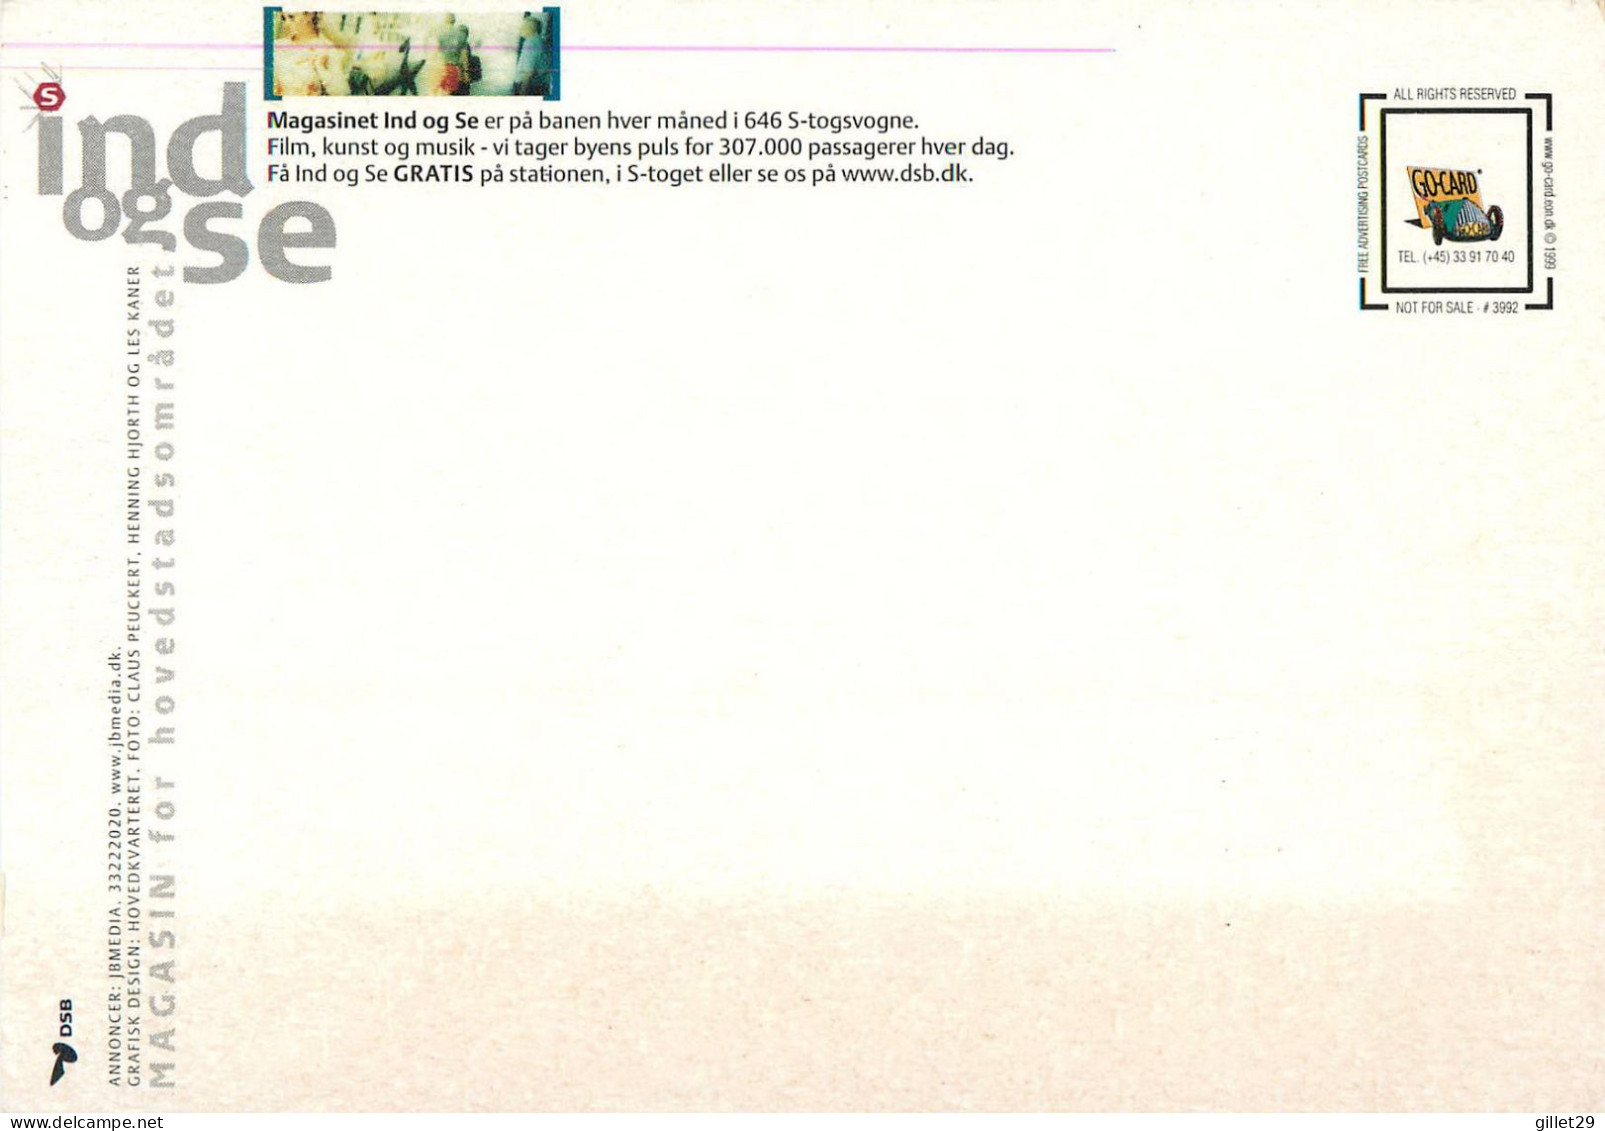 ADVERTISING, PUBLICITÉ - LE MAGAZINE VENEZ VOIR - MAGASINET IND OG SE - GO-CARD 1999 No 3992 - - Advertising